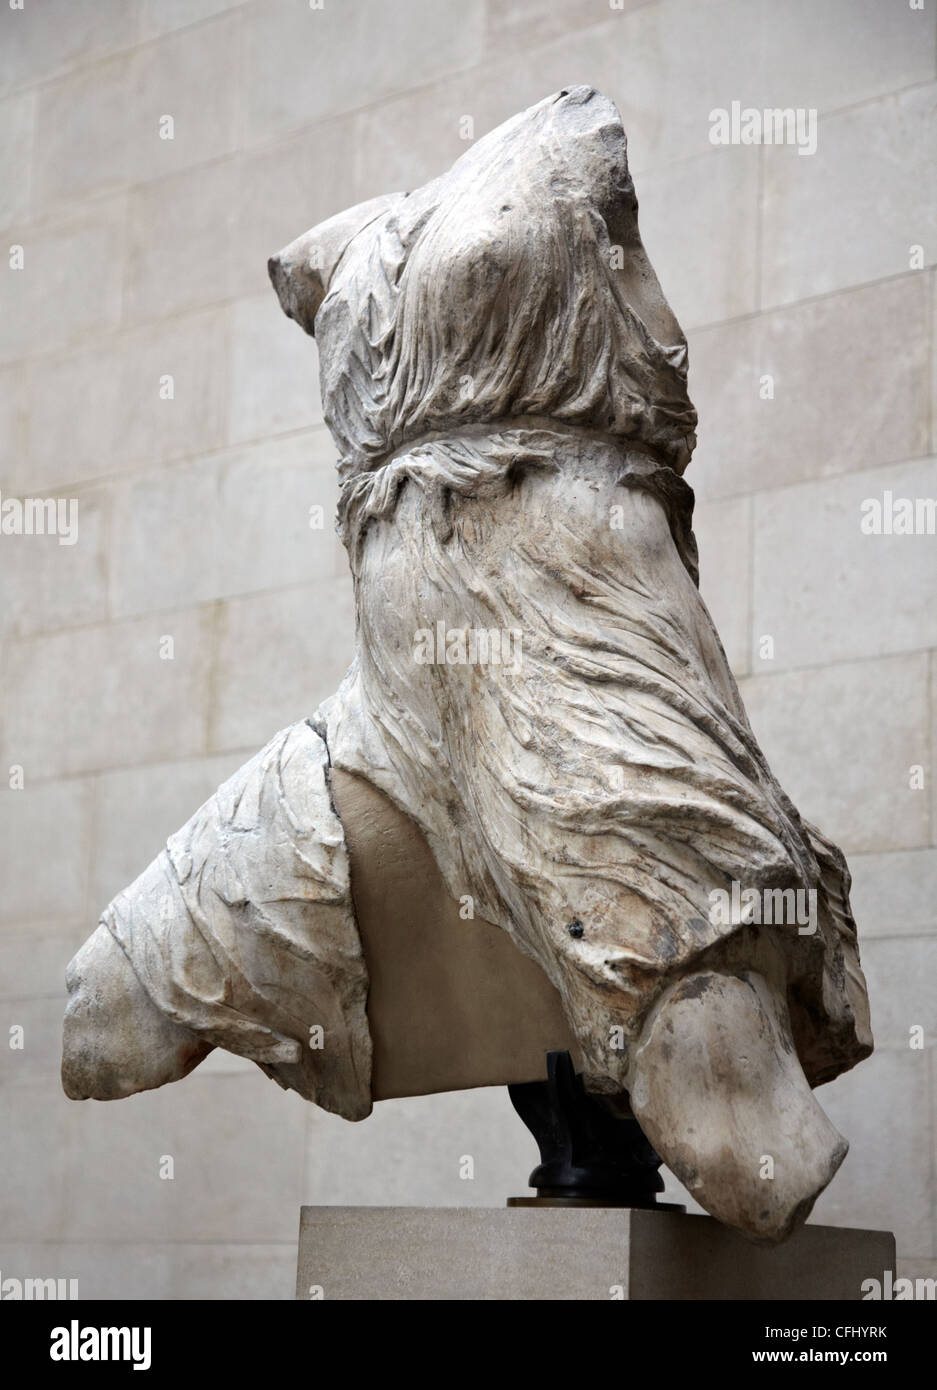 Sculpture On The Parthenon Frieze The British Museum London UK Europe Stock Photo